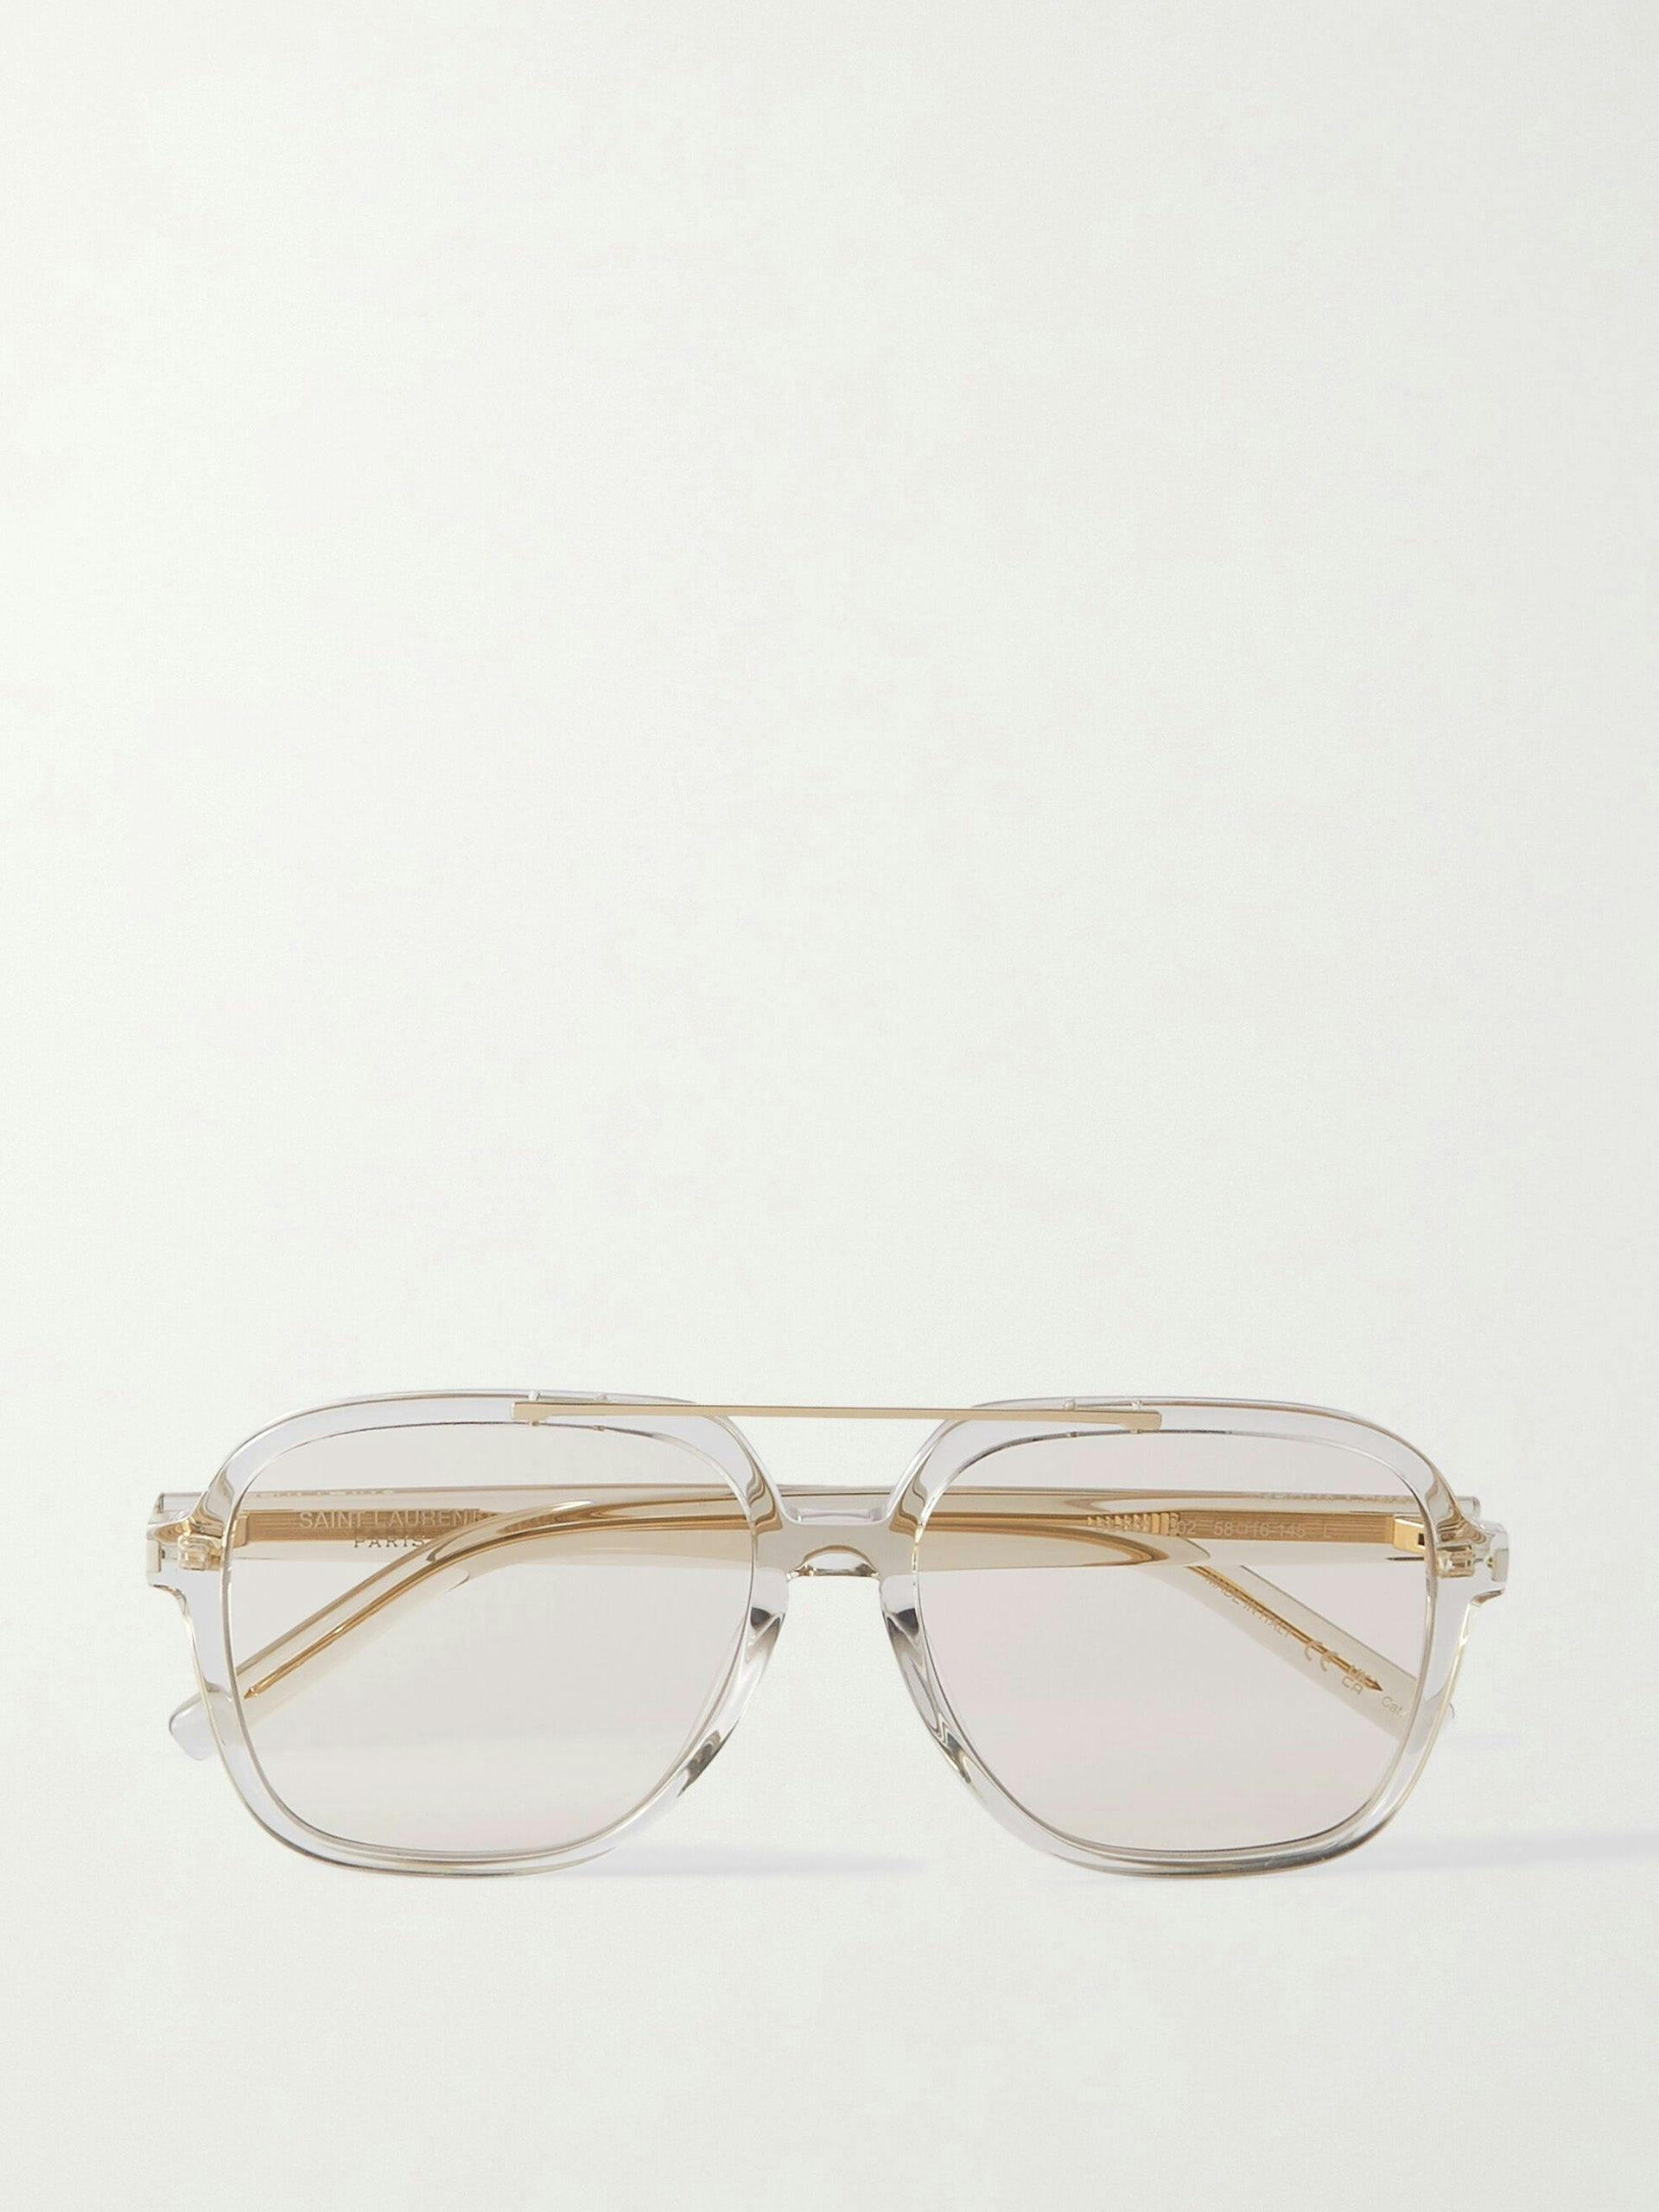 Aviator-style acetate sunglasses